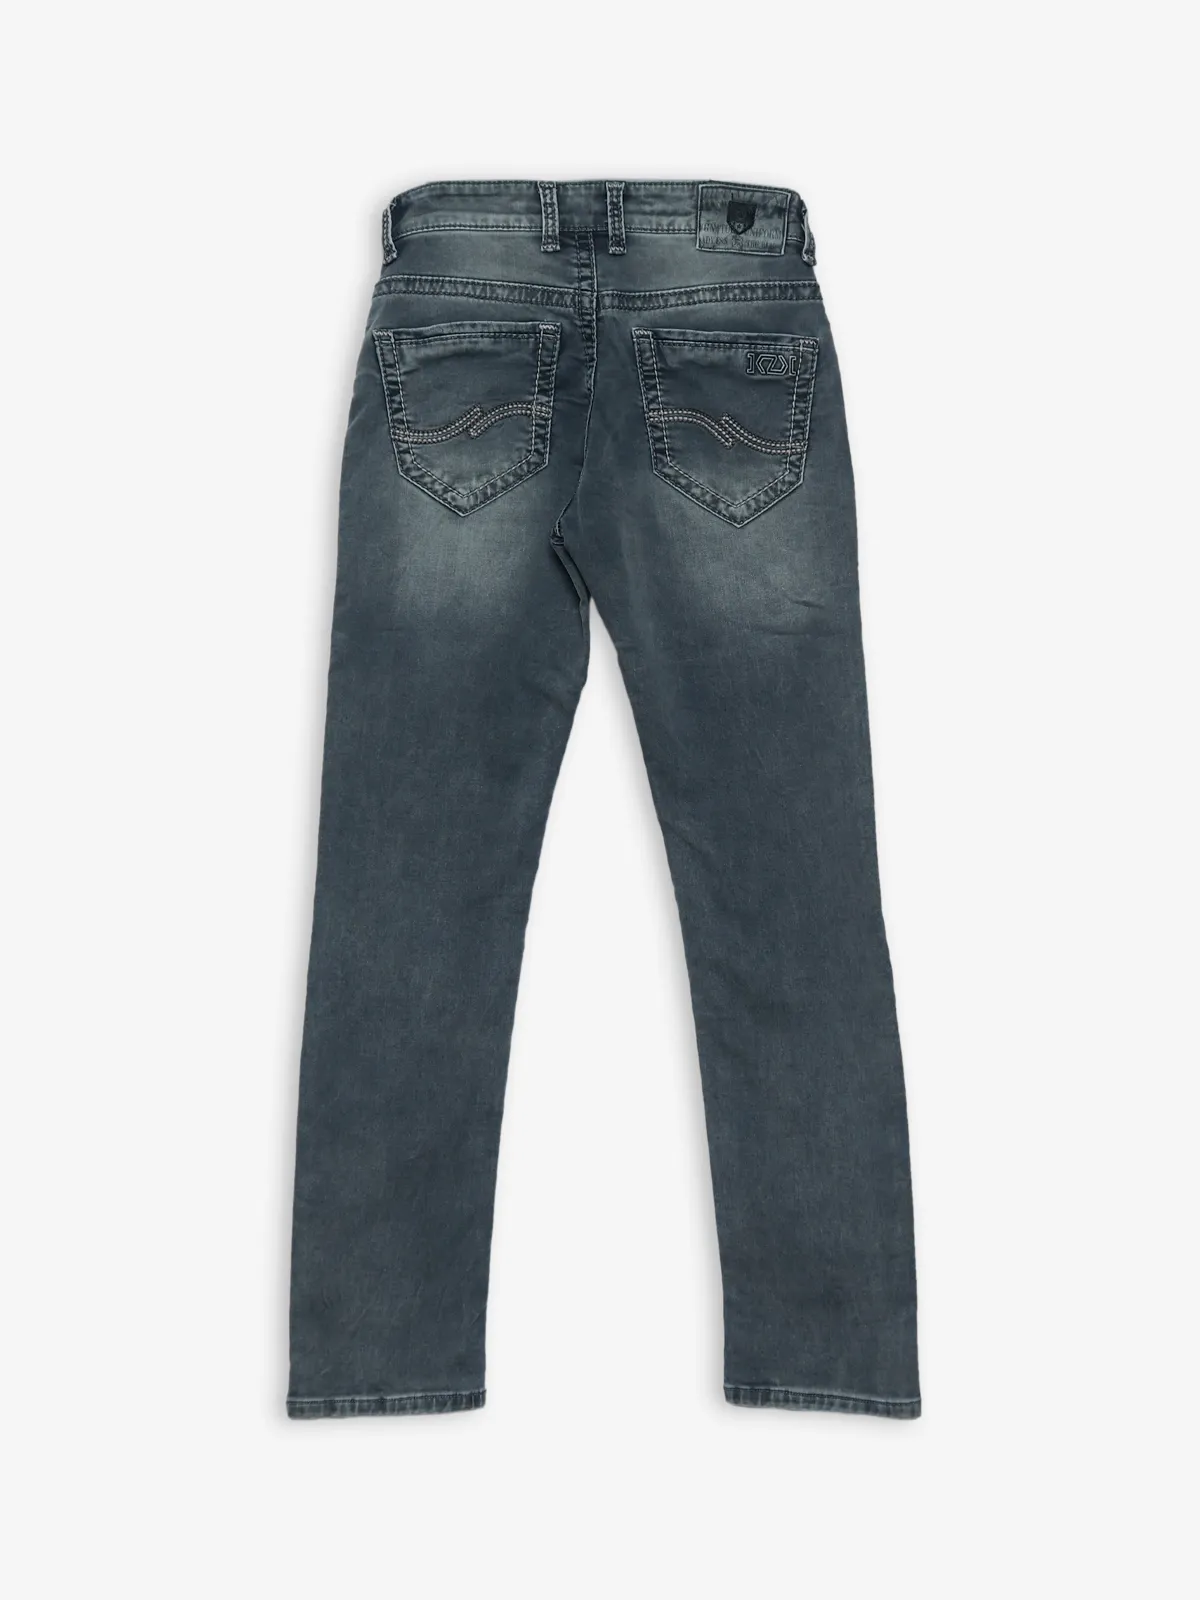 Kozzak dark grey washed super skinny fit jeans